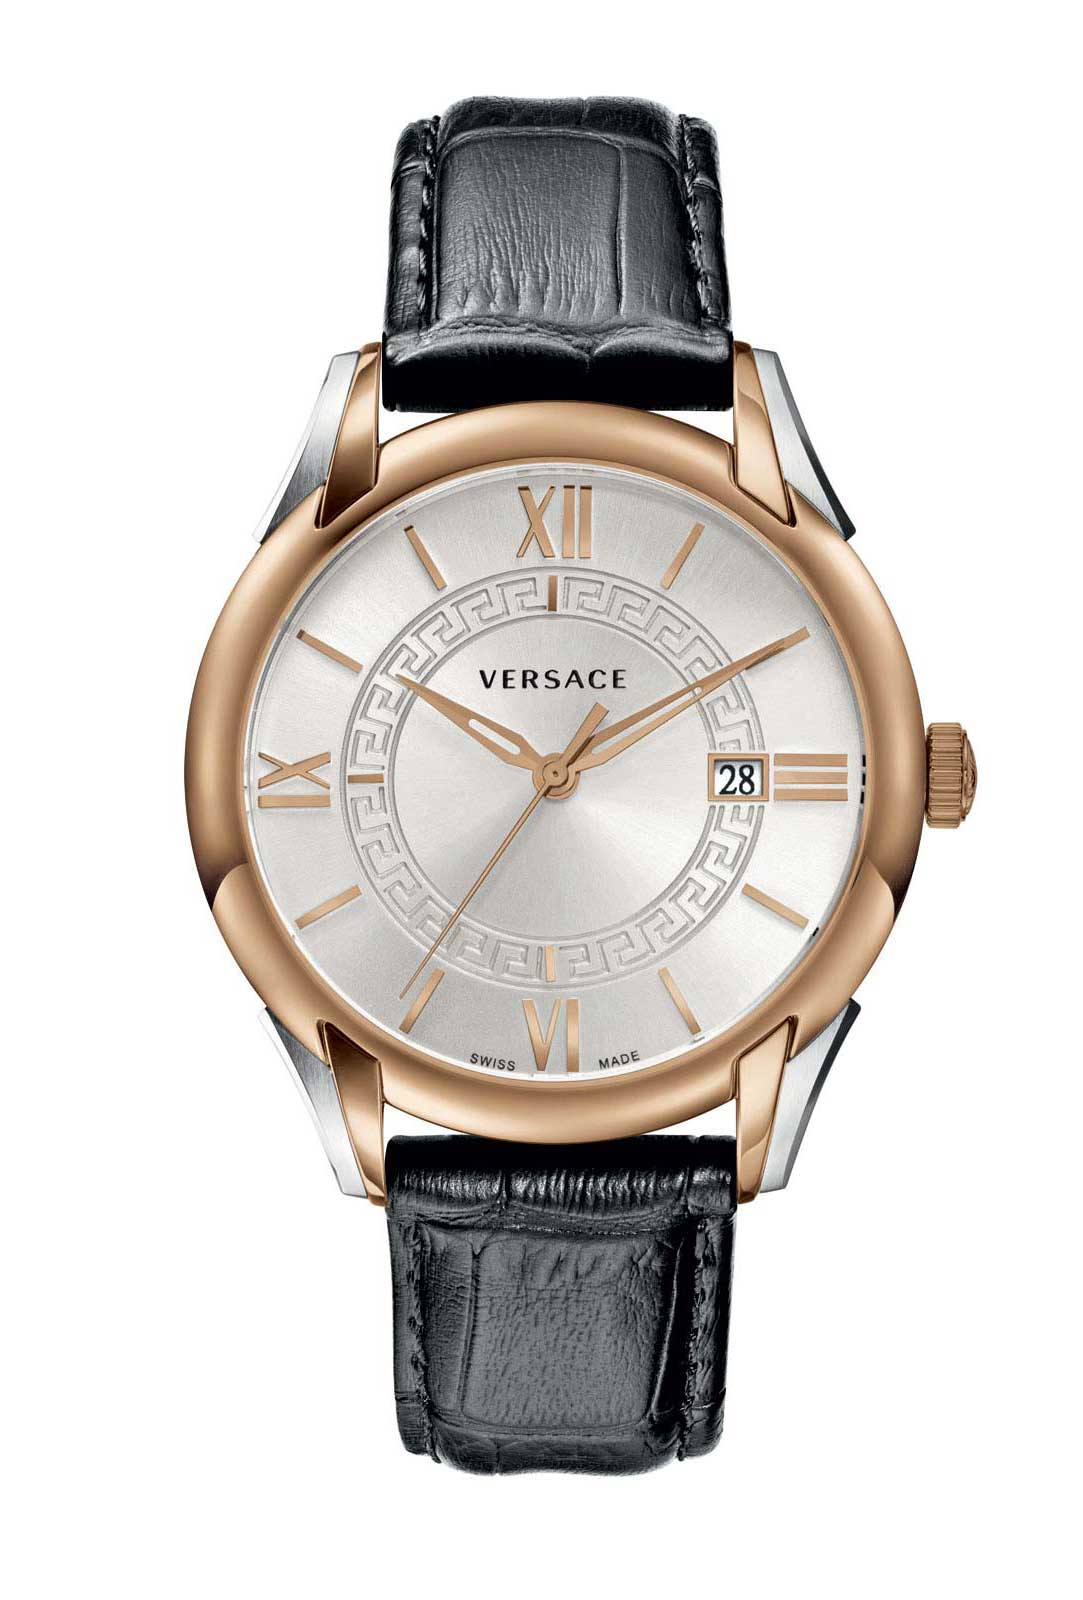 Versace QUARTZ 3 HANDS watch 715.2 TWO TONE